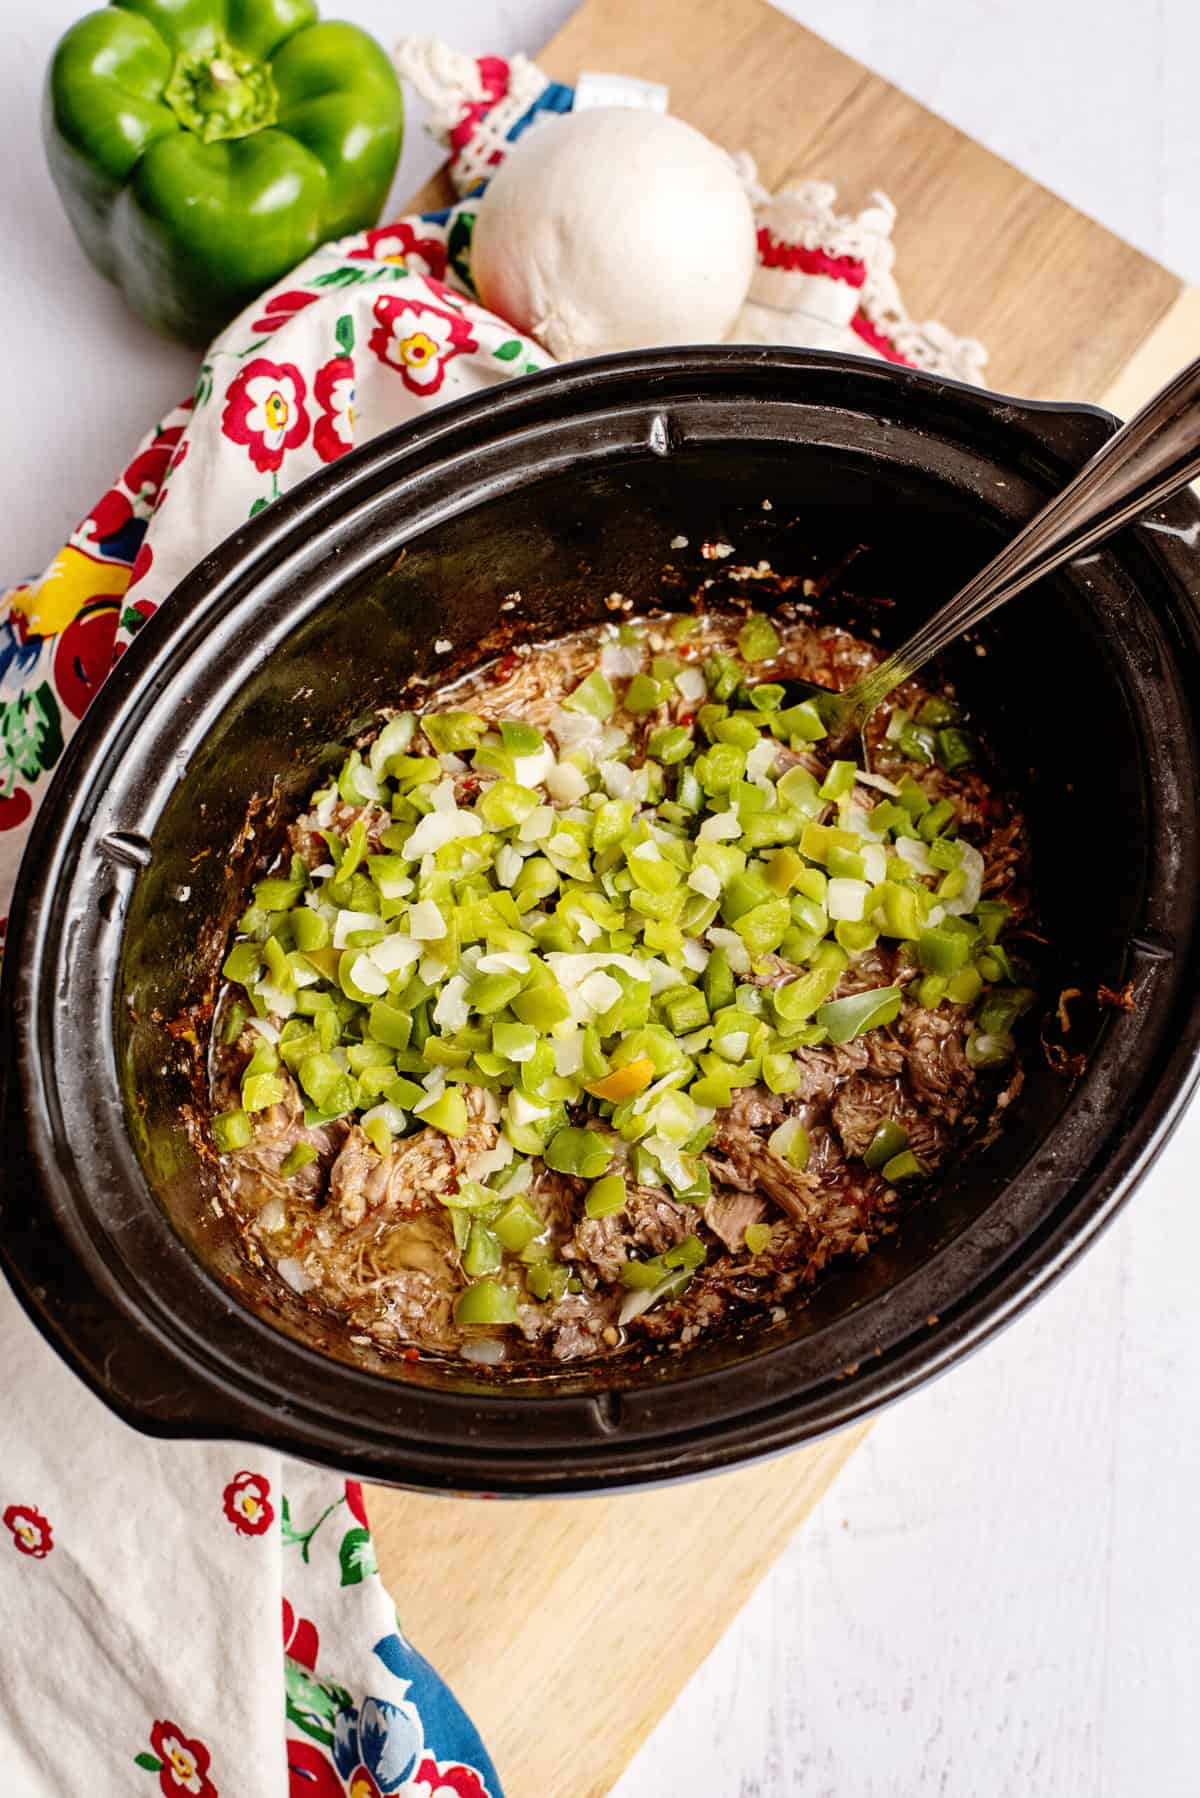 add veggies to beef in the crock pot